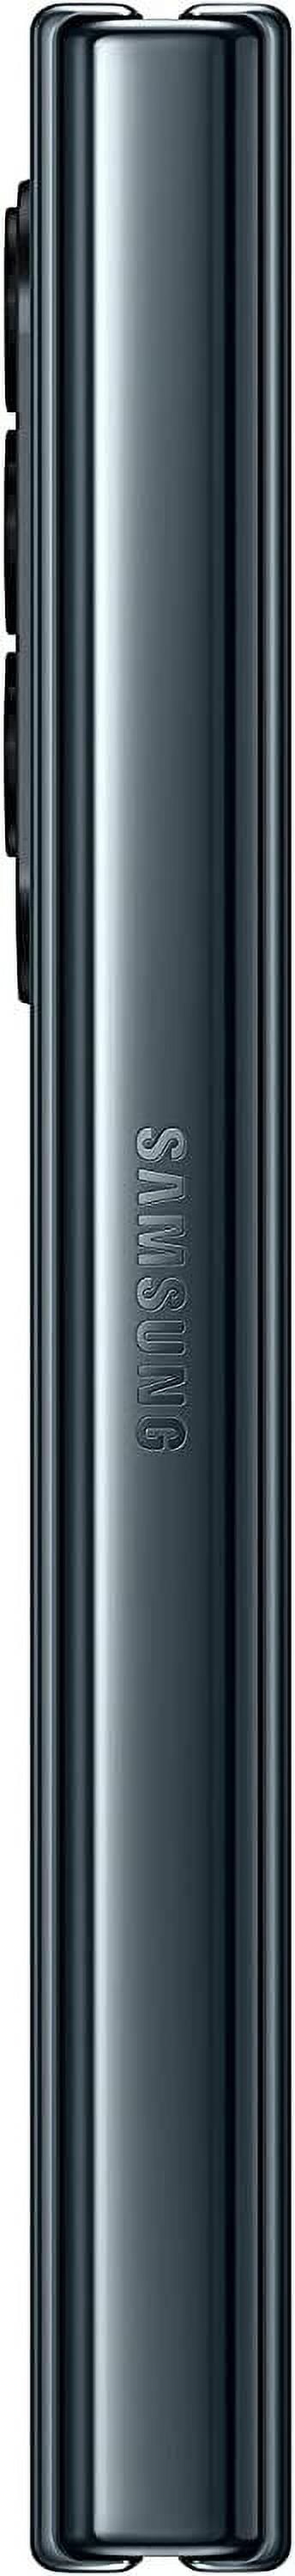 Cell Condition Graygreen 256GB -Excellent - Phone Factory (US Unlocked Samsung Z Fold4 Model) SM-F936U Galaxy